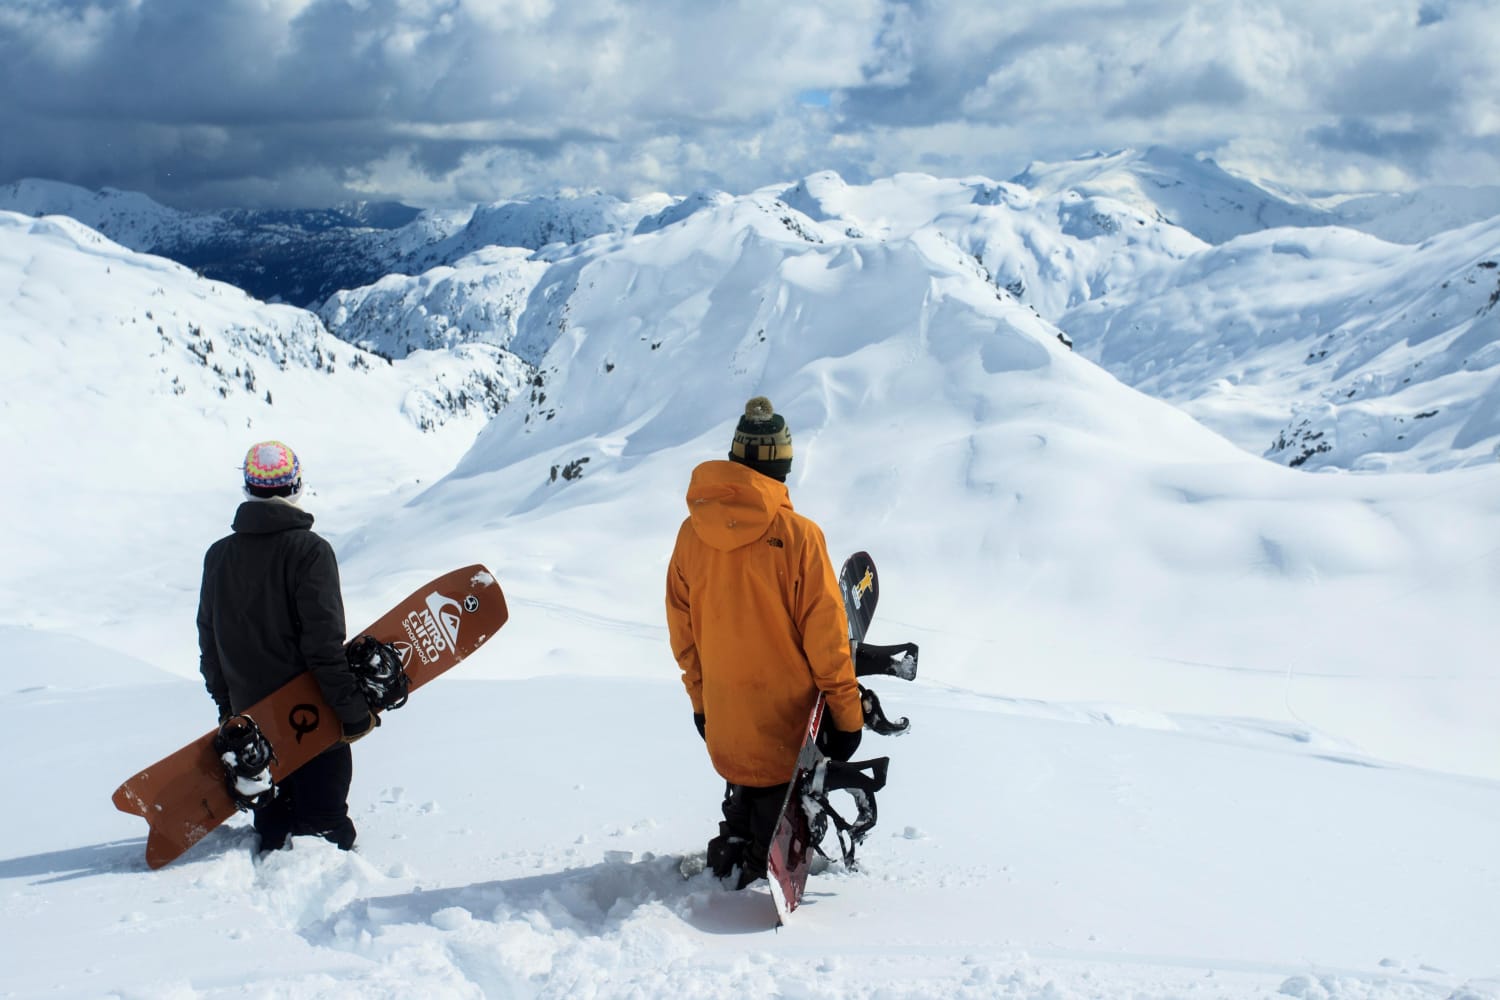 Nitros 28 Winters Watch the snowboard movie premiere